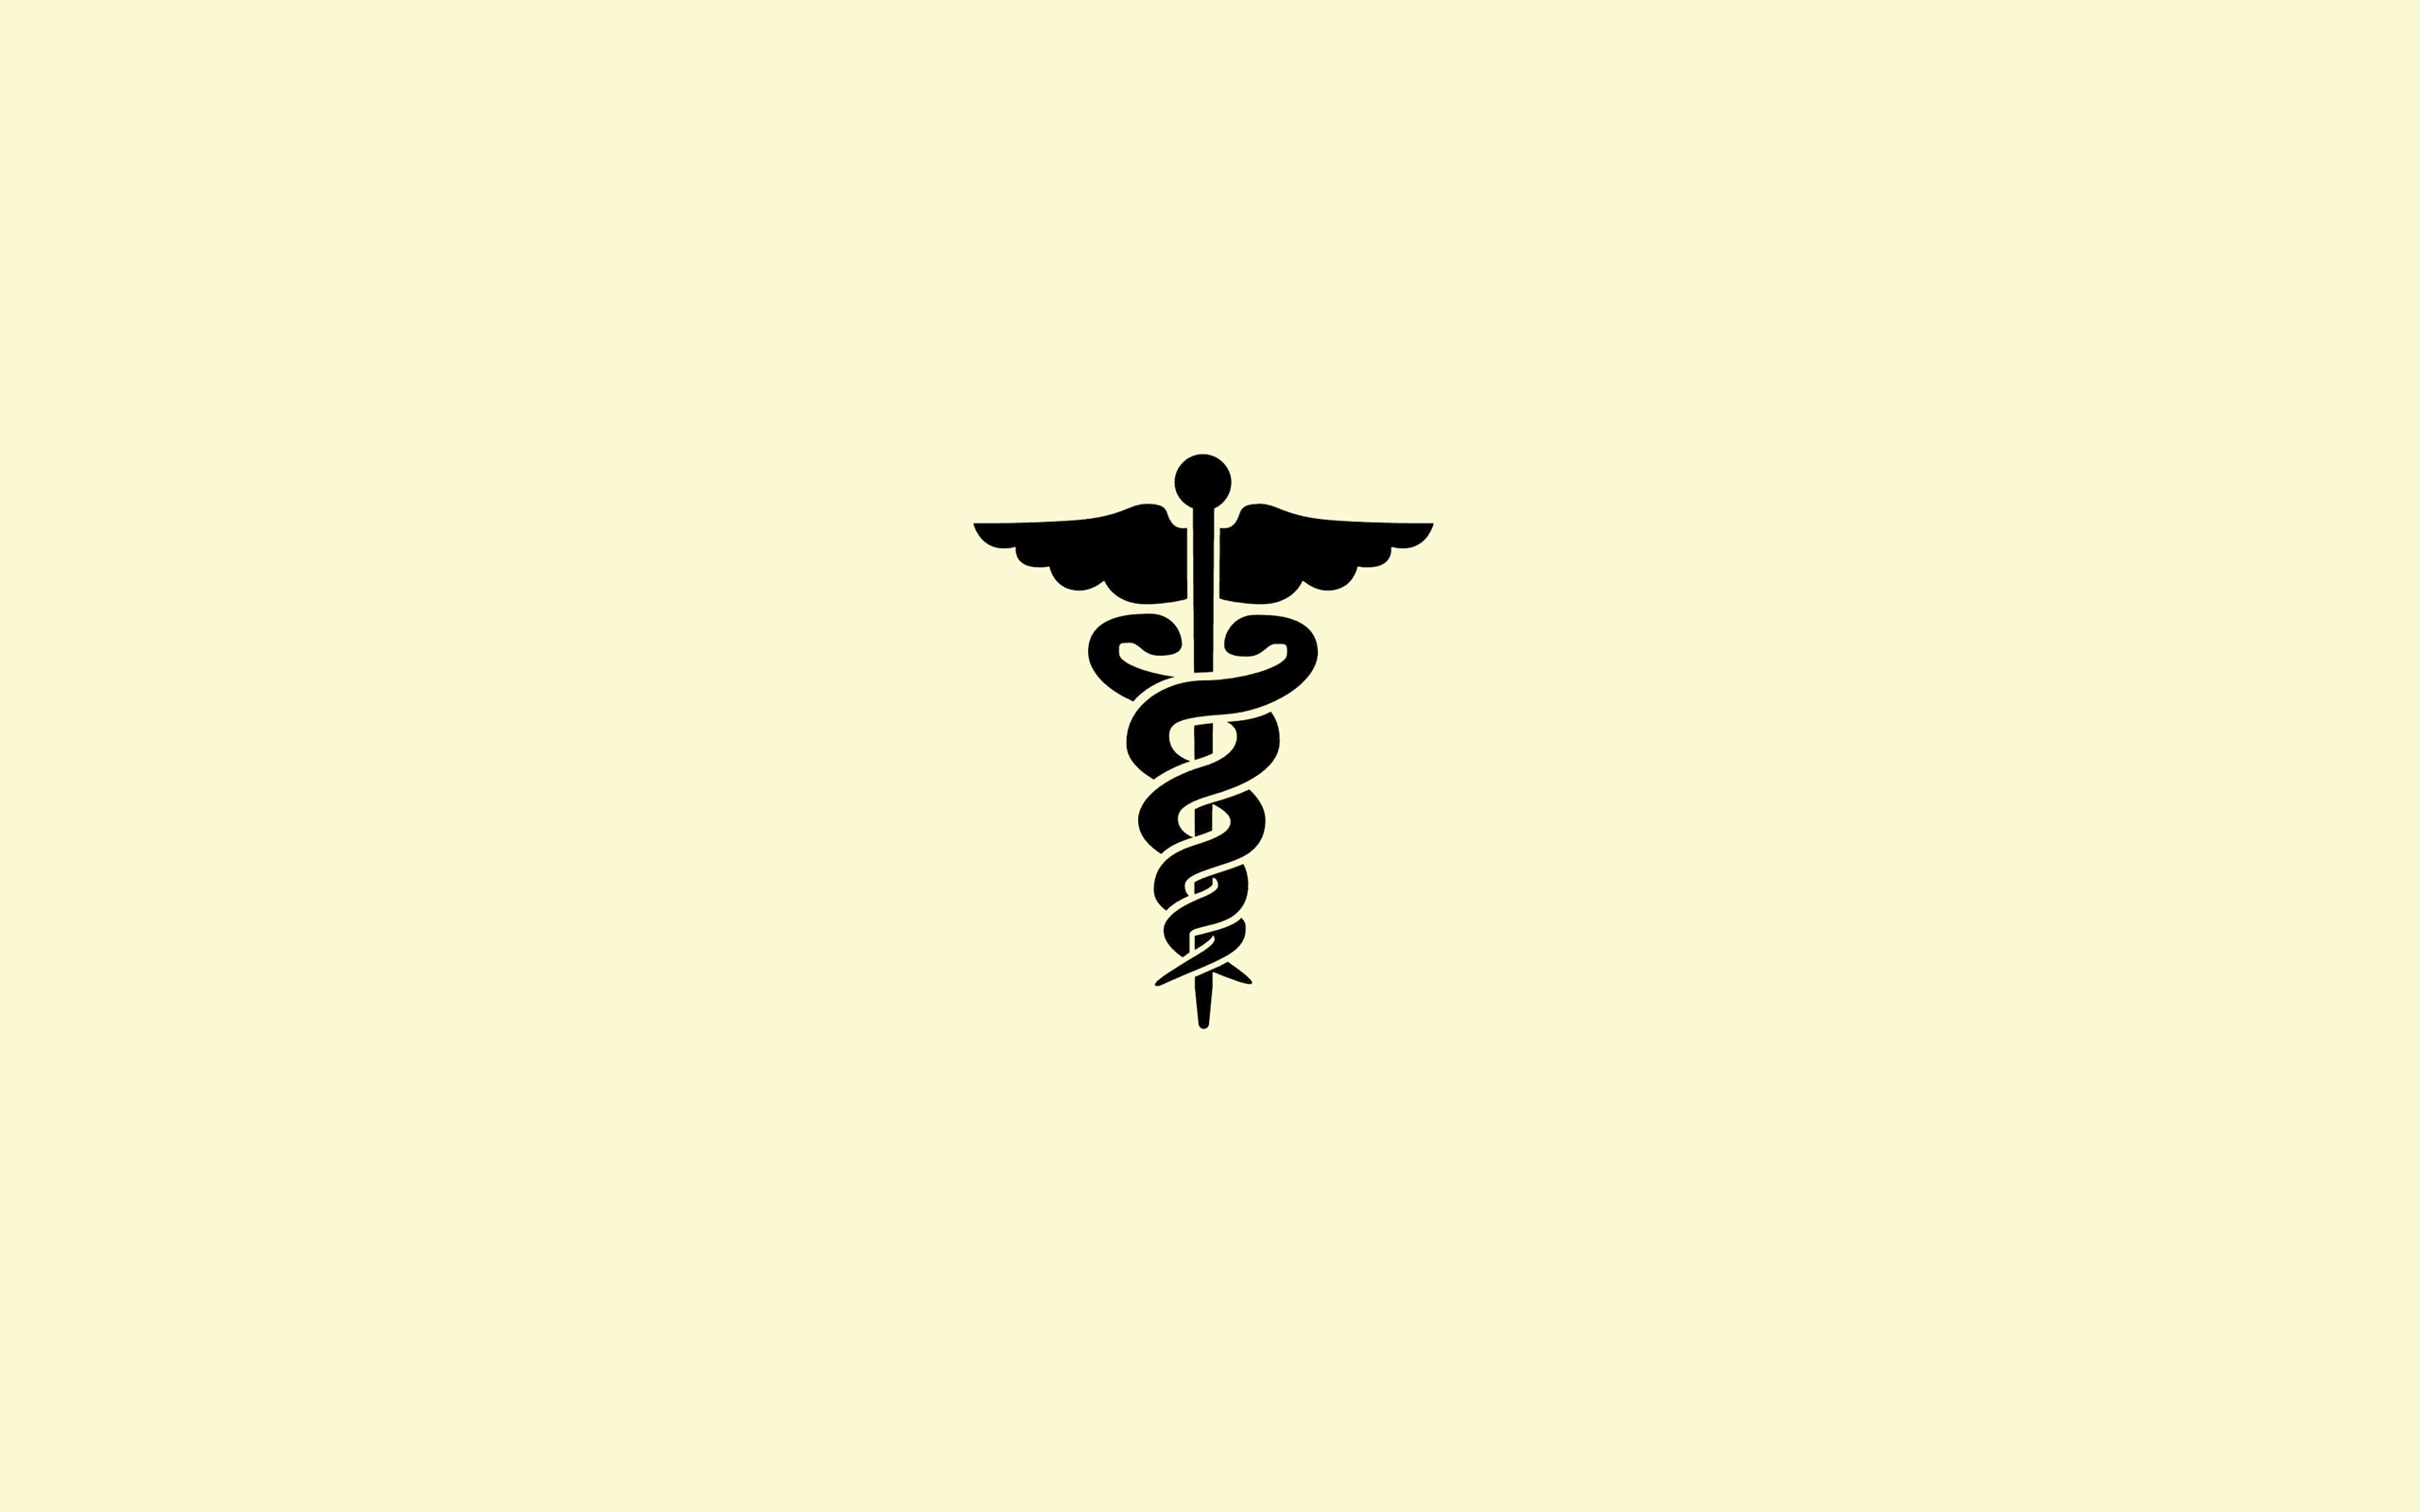 HD Medical Wallpaper. Medical wallpaper, Medical, Medical symbols